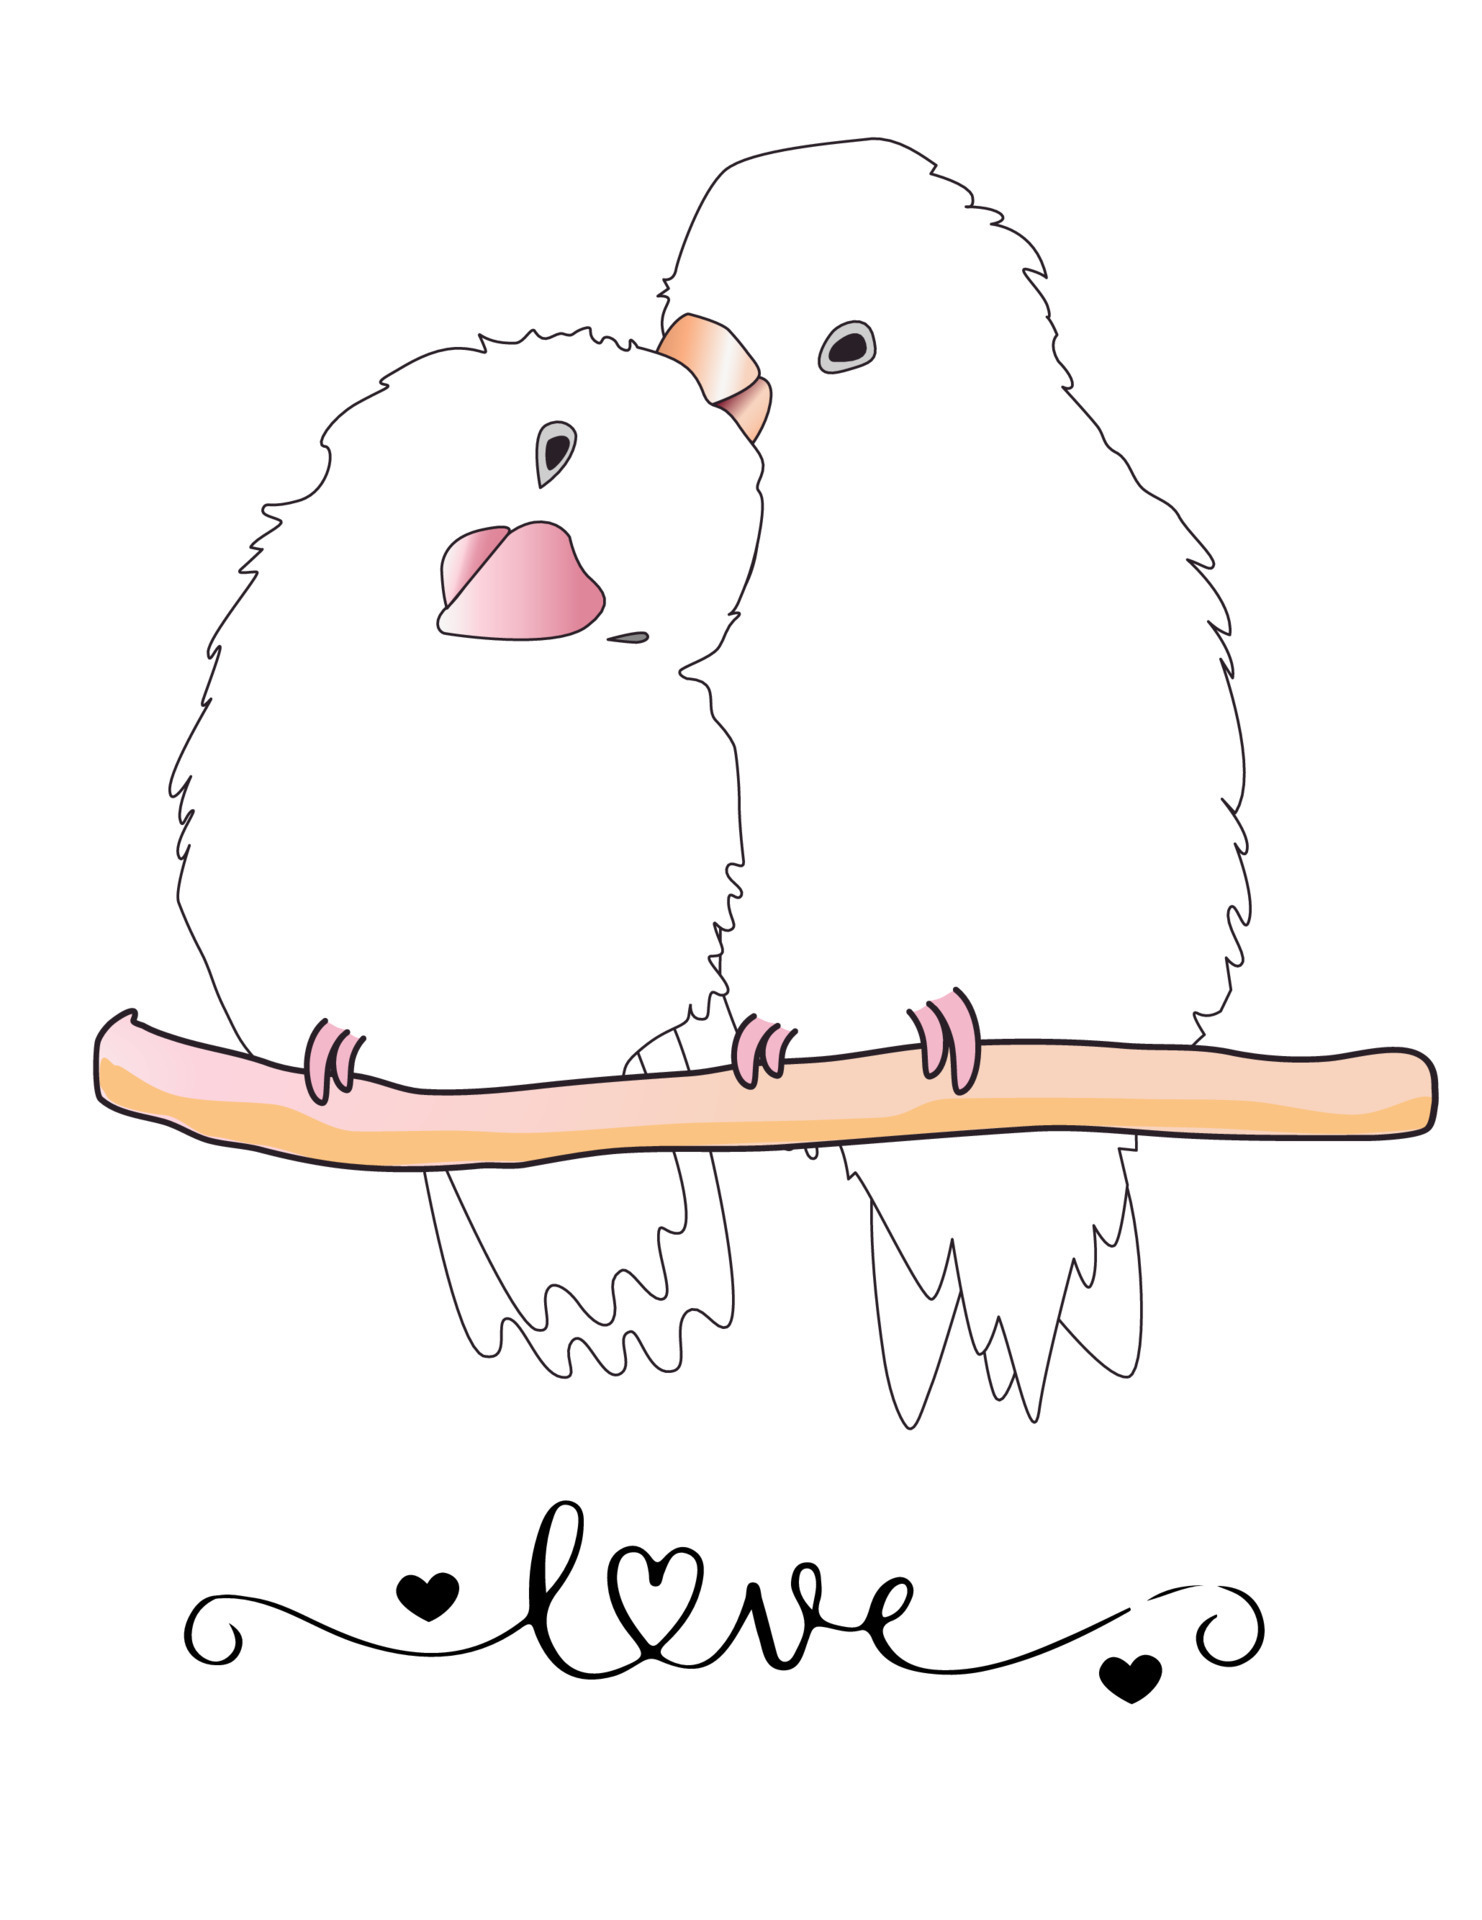 ilovedrawing | draw. play. love.